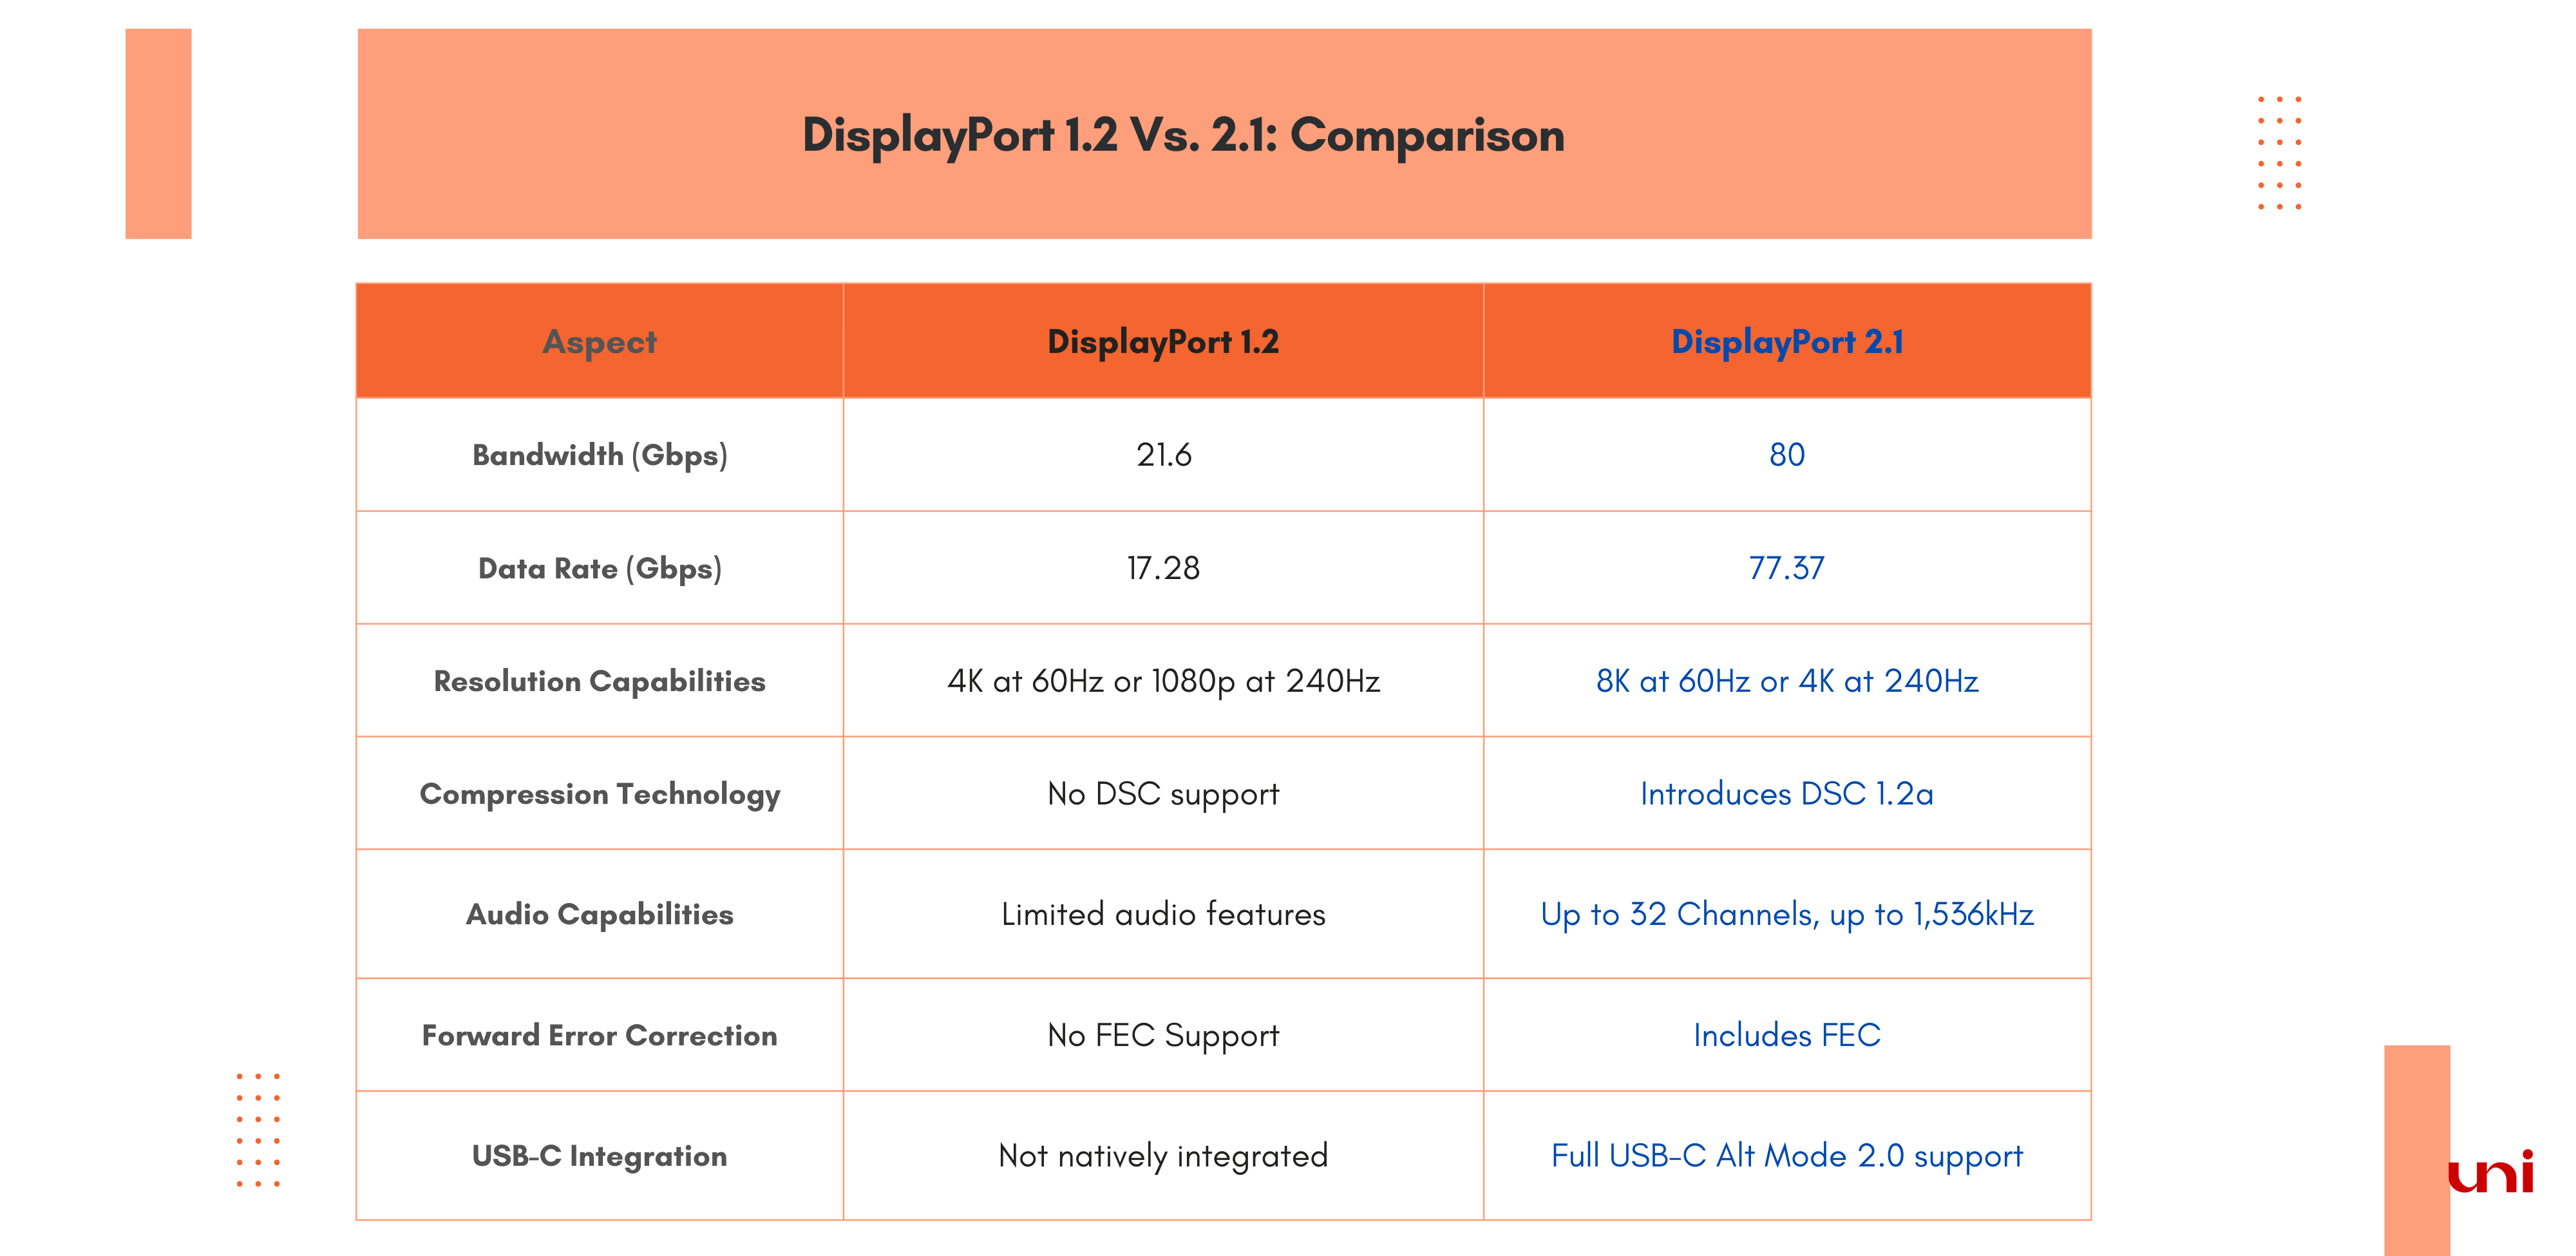 DisplayPort 1.2 Vs. 2.1